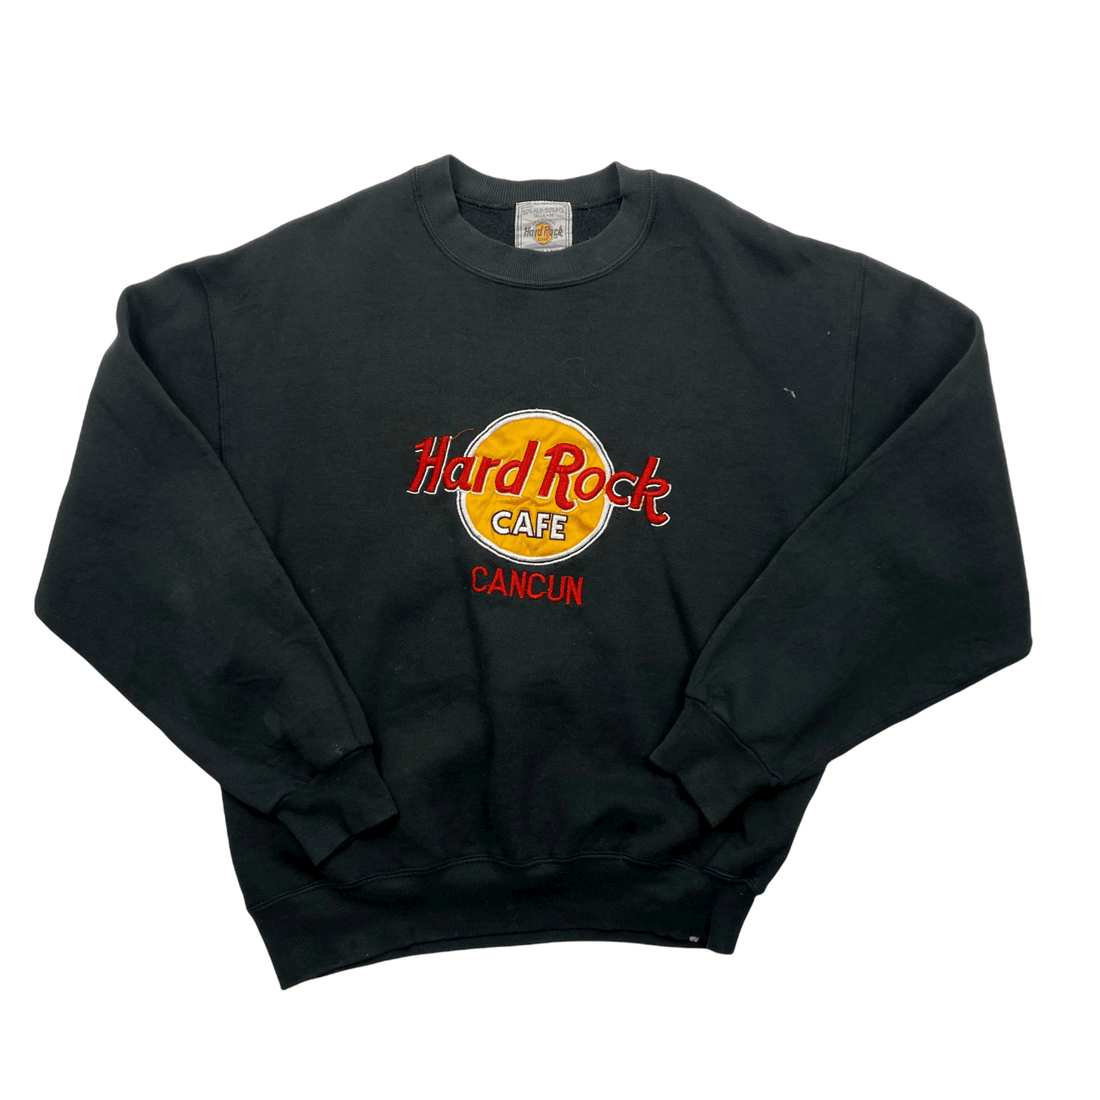 Vintage 90s Black Hard Rock Cafe Cancun Spell-Out Sweatshirt - Medium - The Streetwear Studio